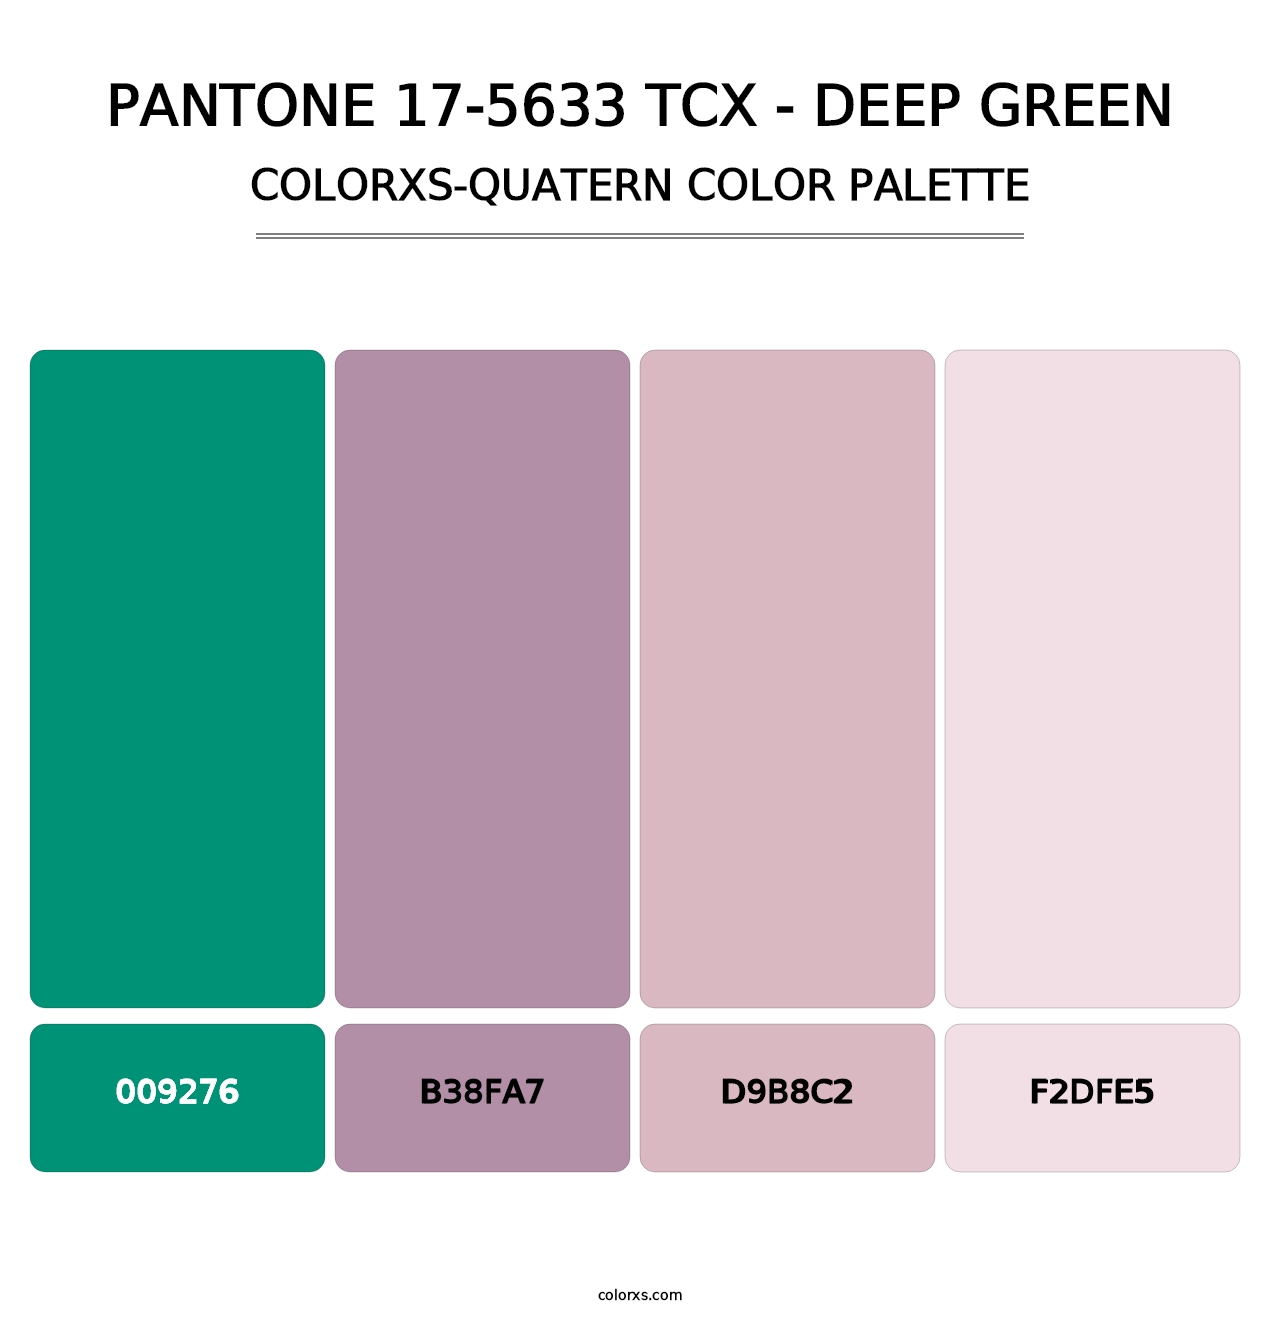 PANTONE 17-5633 TCX - Deep Green - Colorxs Quatern Palette